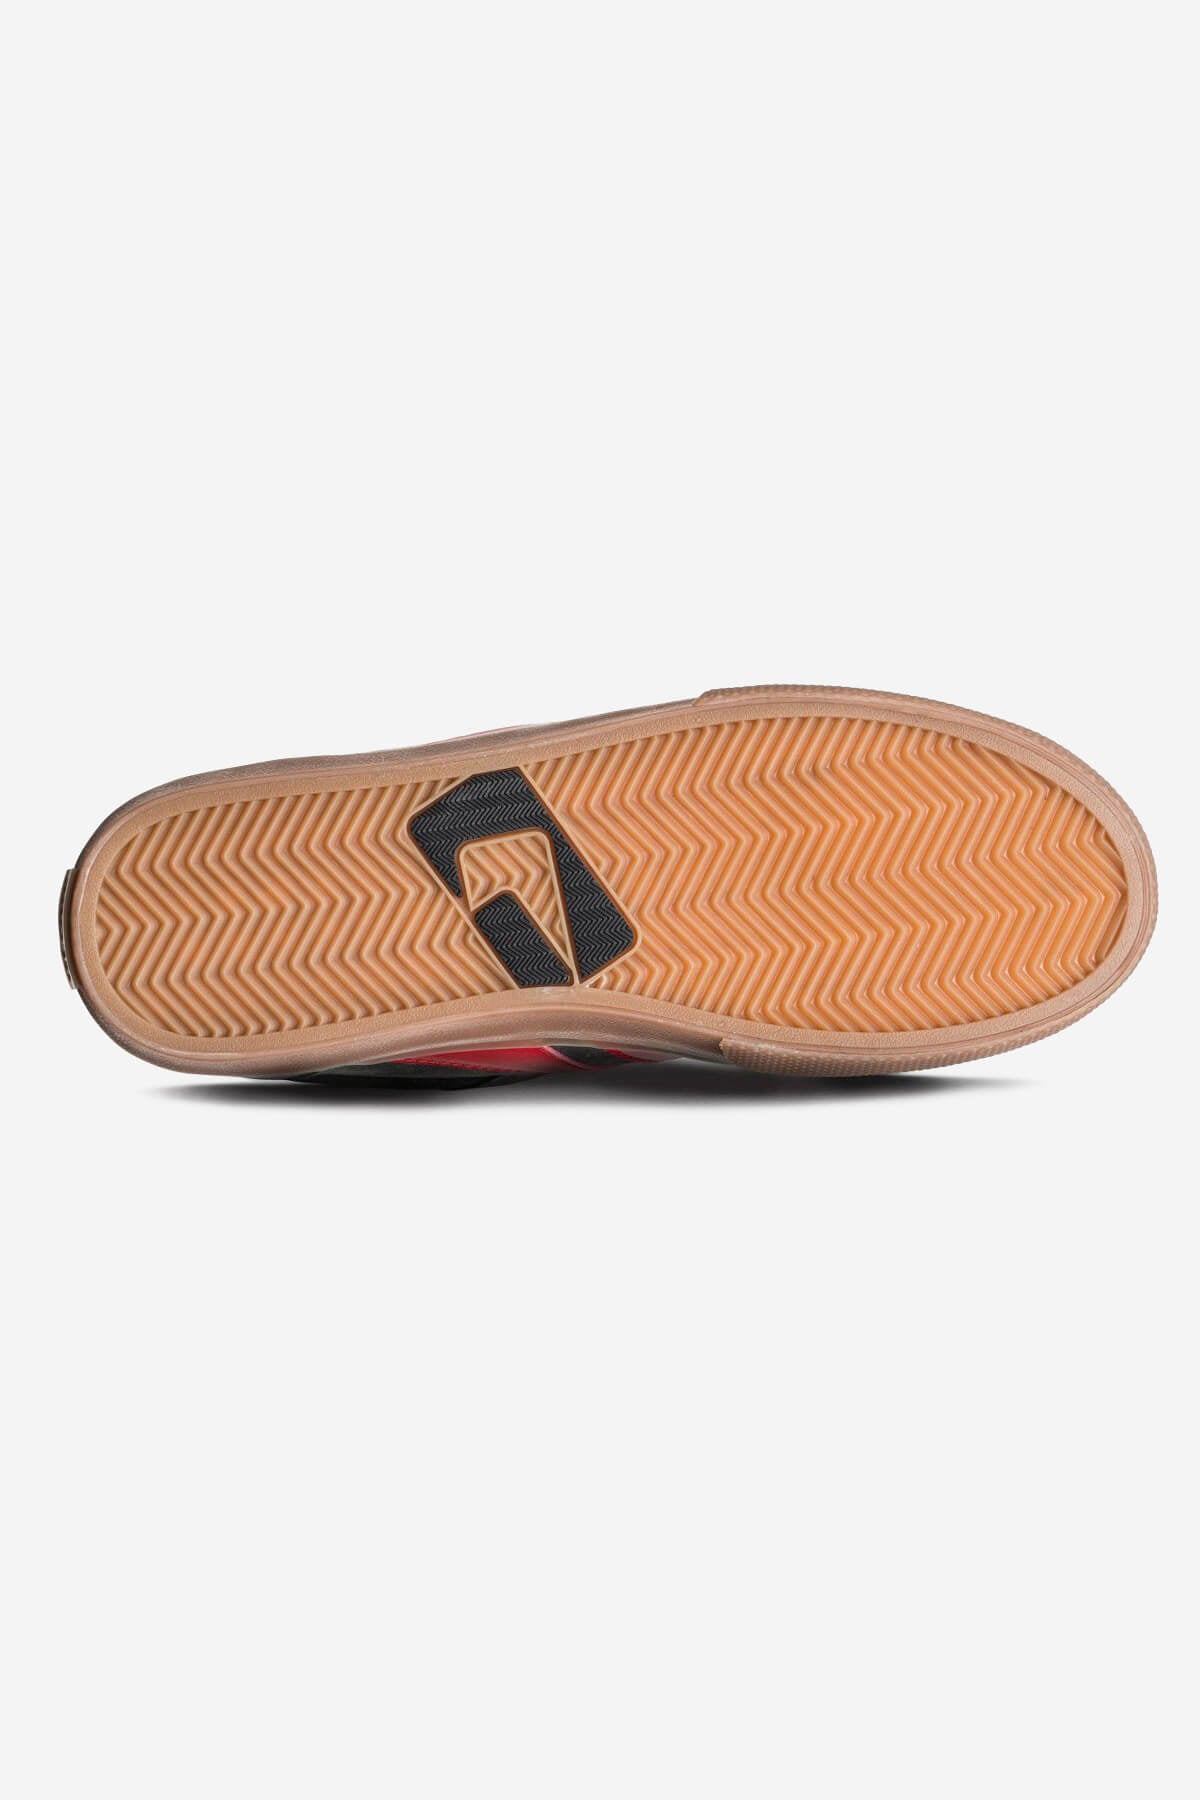 Globe - Zapatos Encore 2 - Charcoal/Gum/Red - skateboard